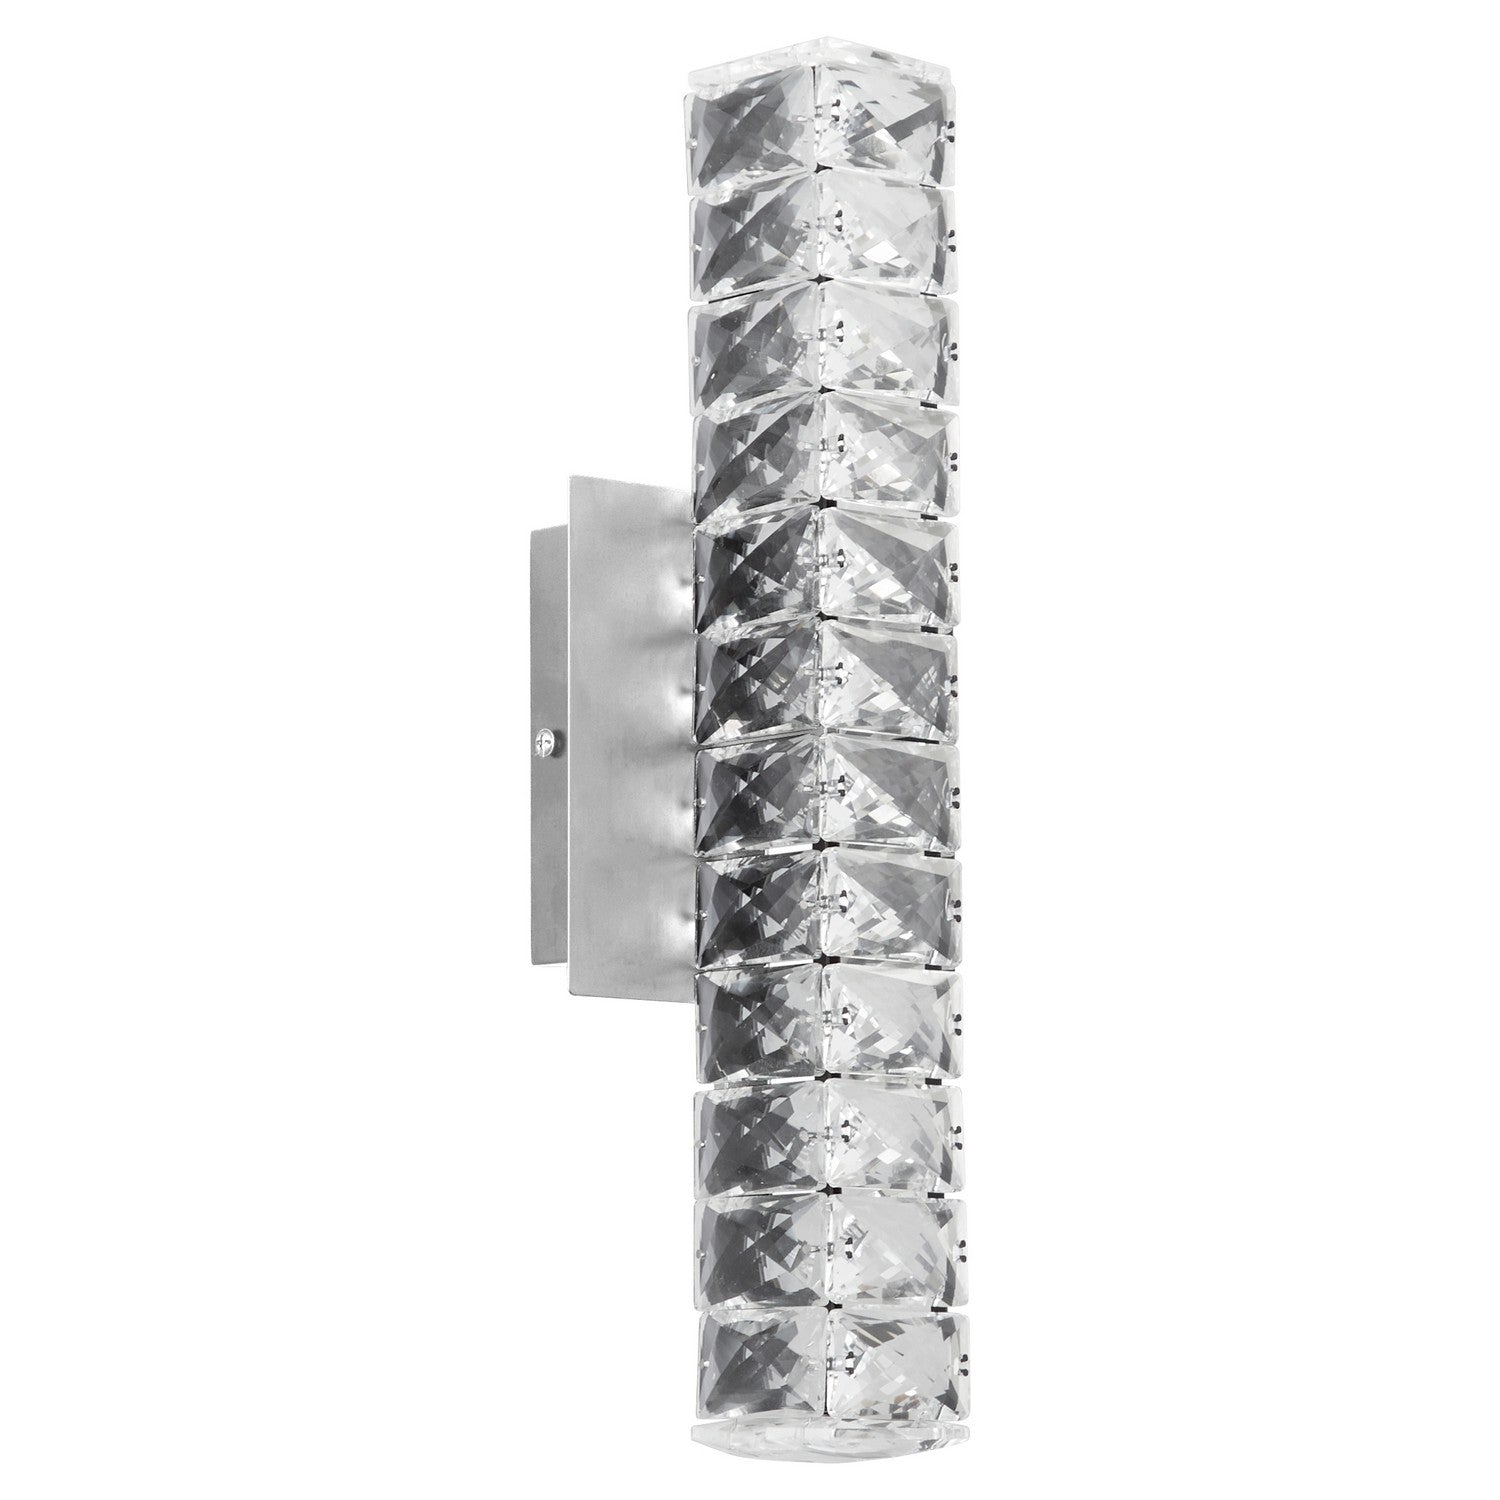 Oxygen Elan 3-572-24 Modern Sconce LED Wall Light Fixture - Satin Nickel